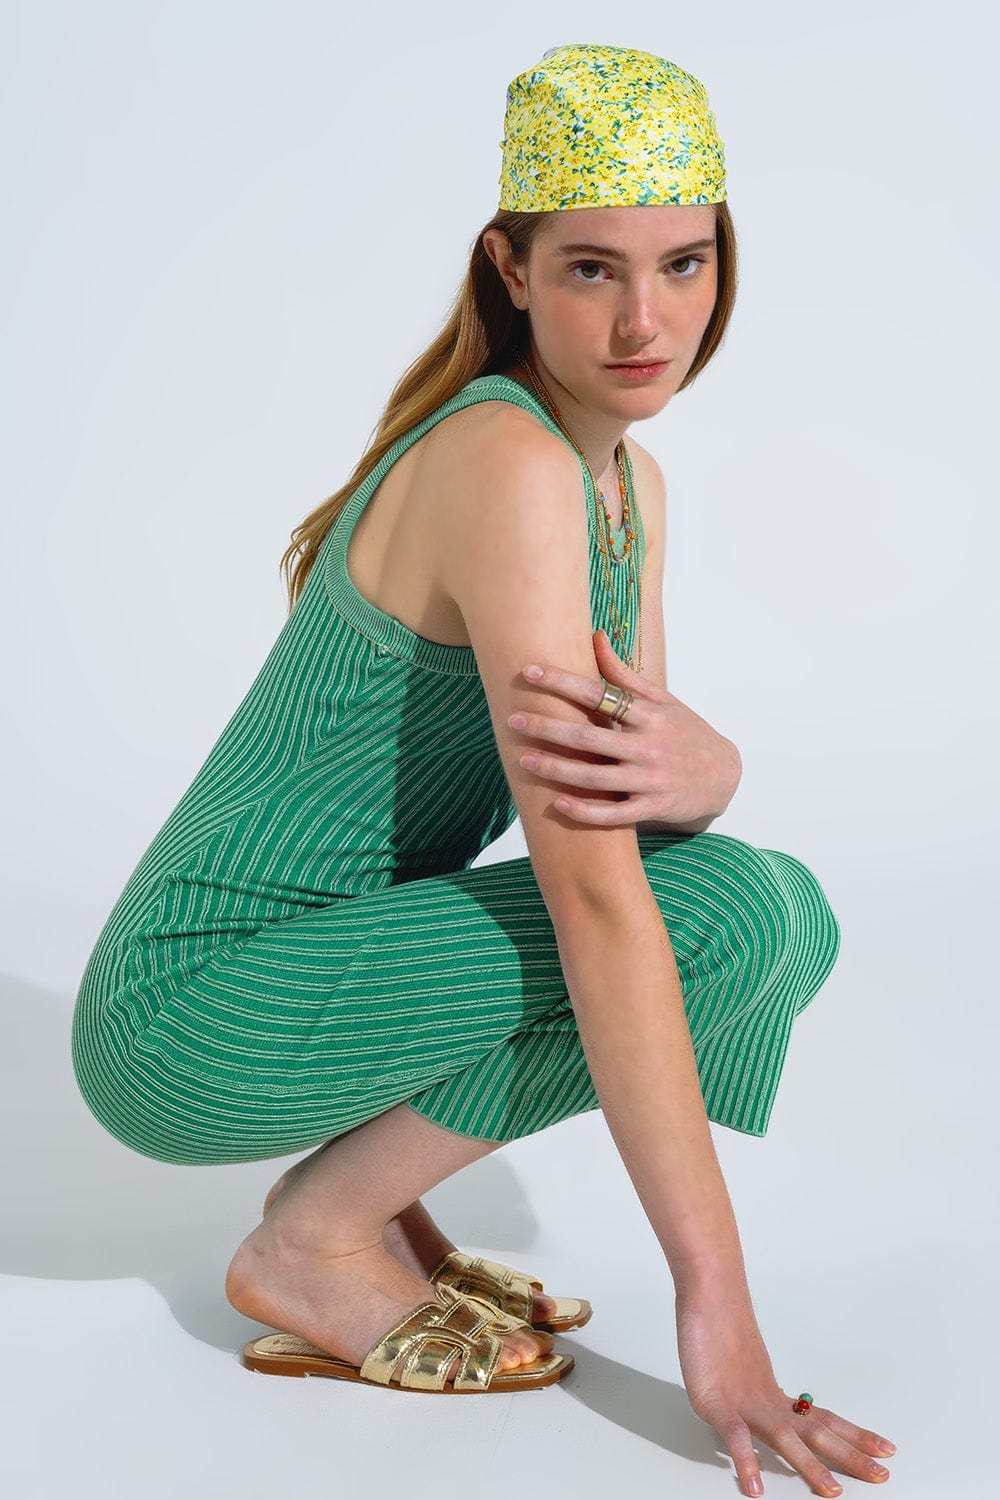 Q2 Women's Dress One Size / Green Maxi Sleeveless Halter Bodycon Ribbed Dress In Green